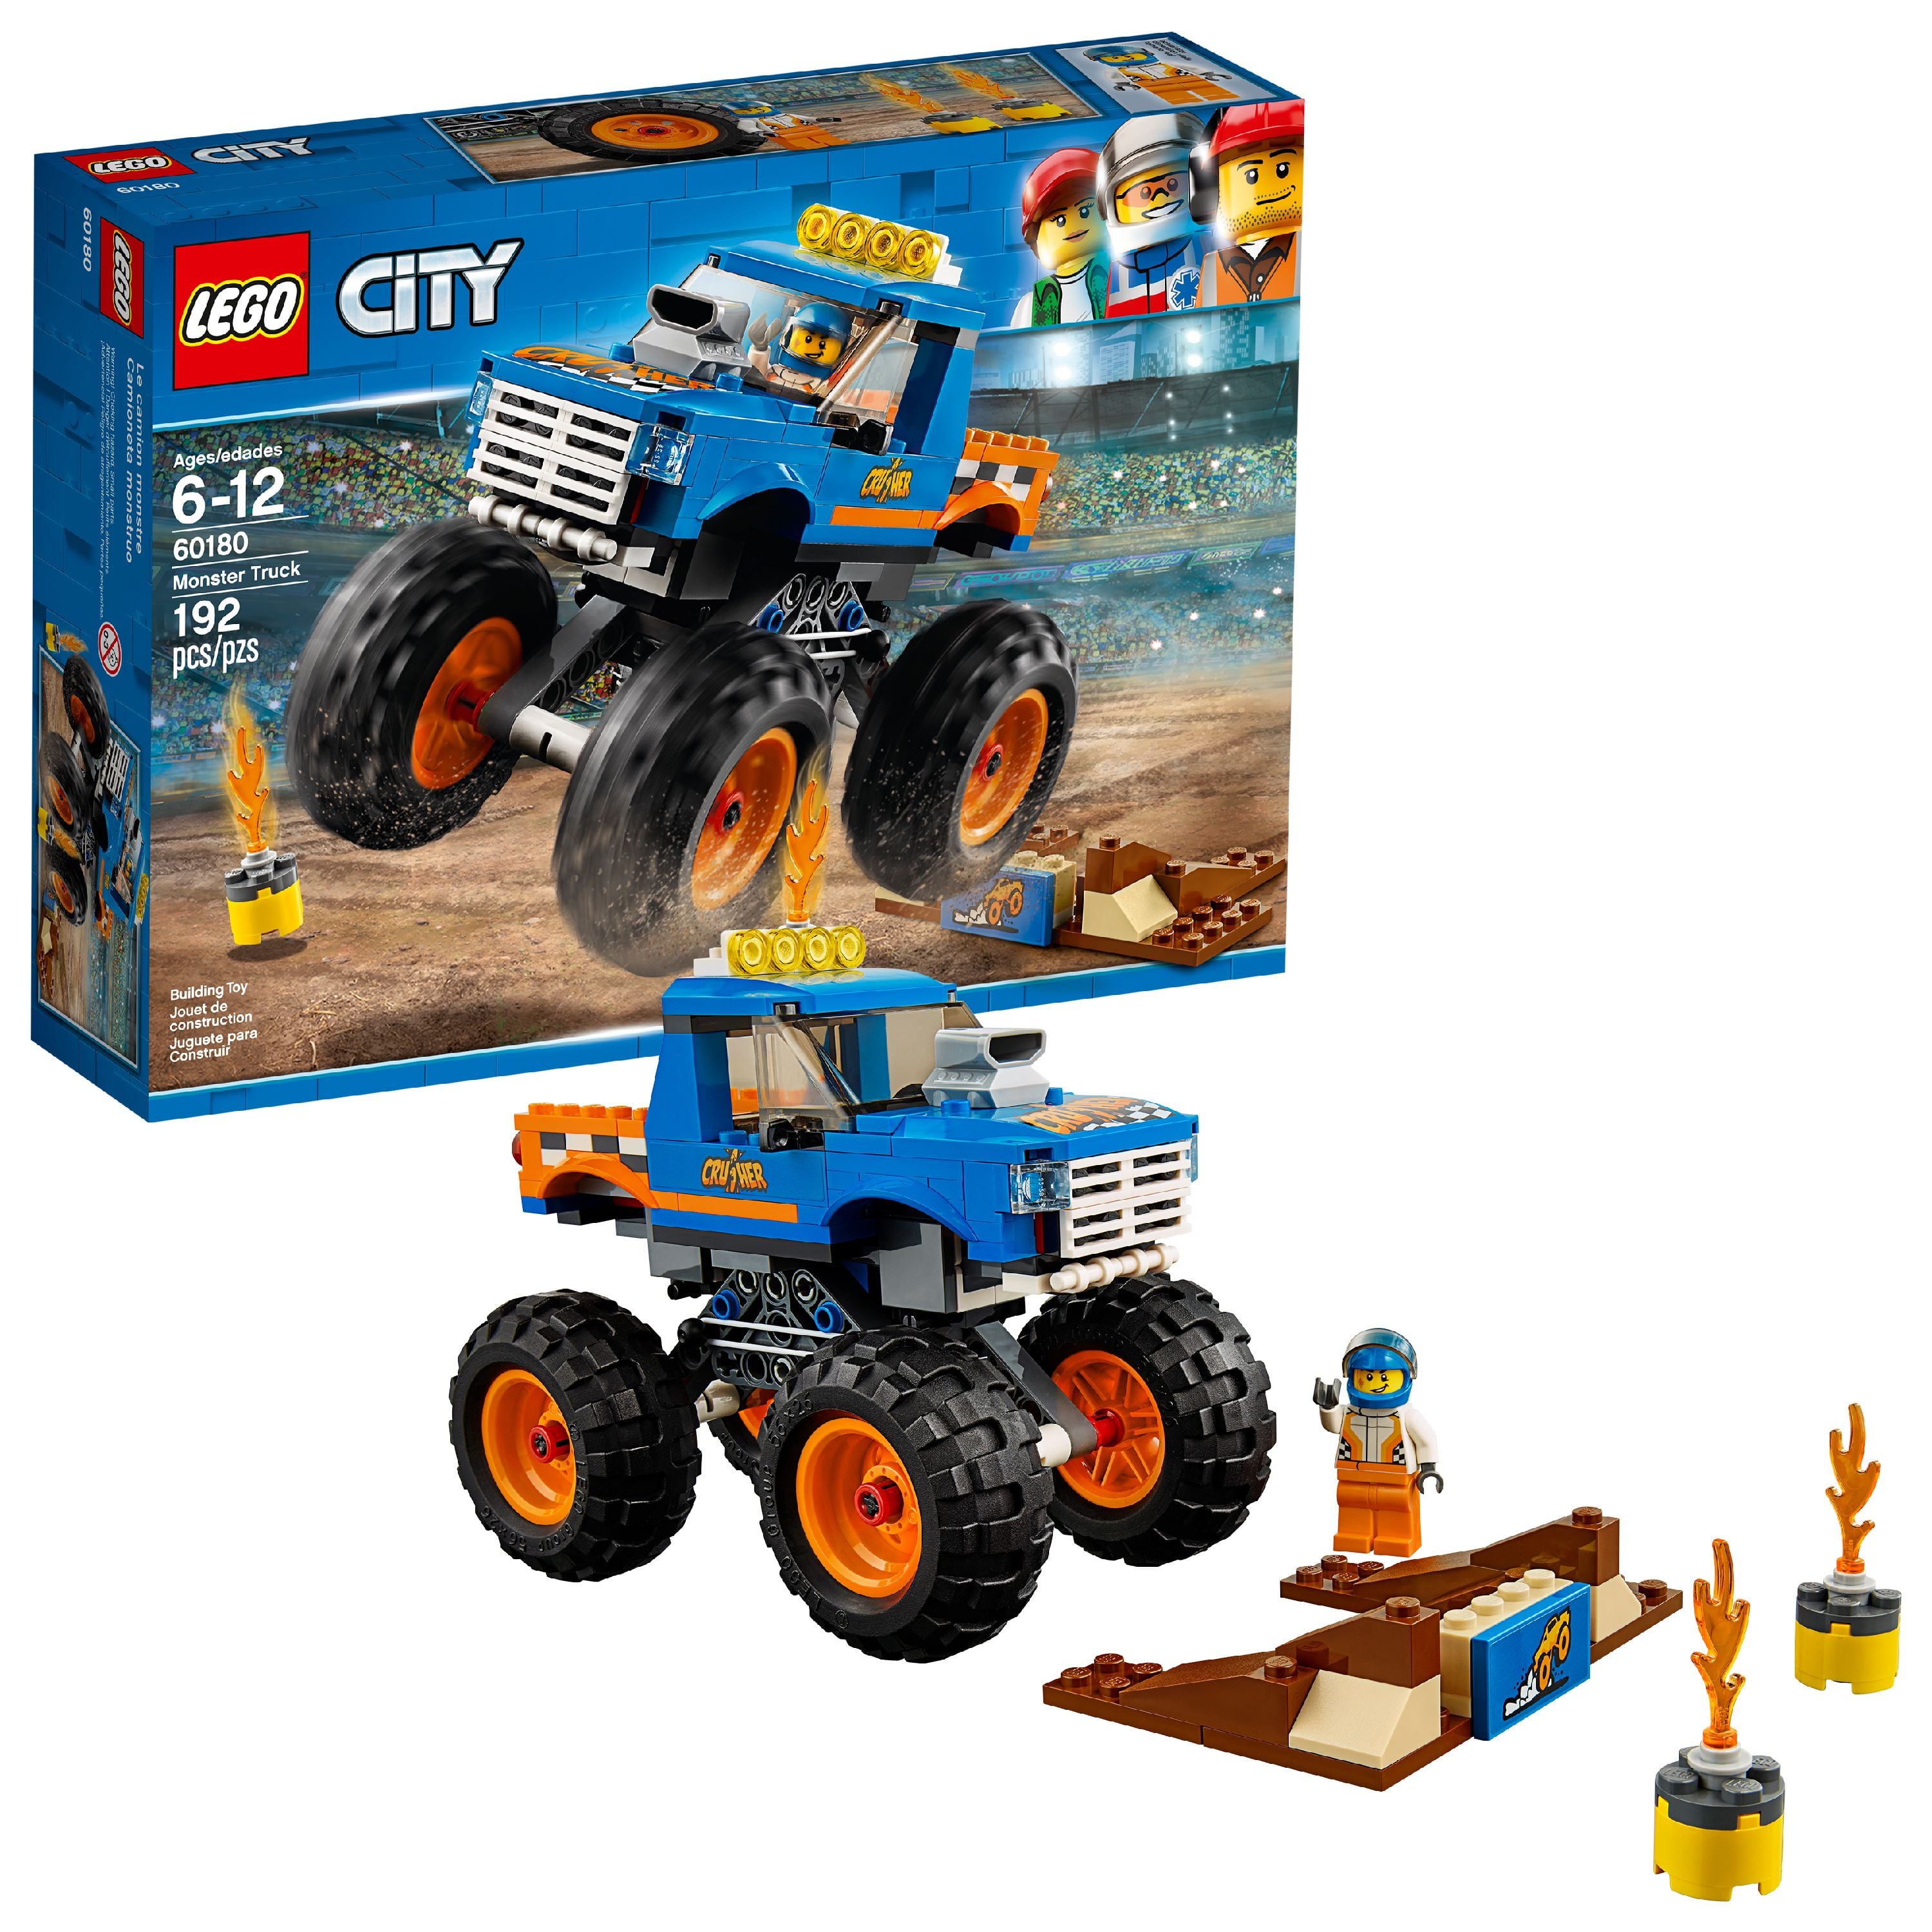 LEGO Great Vehicles Monster Truck - Walmart.com